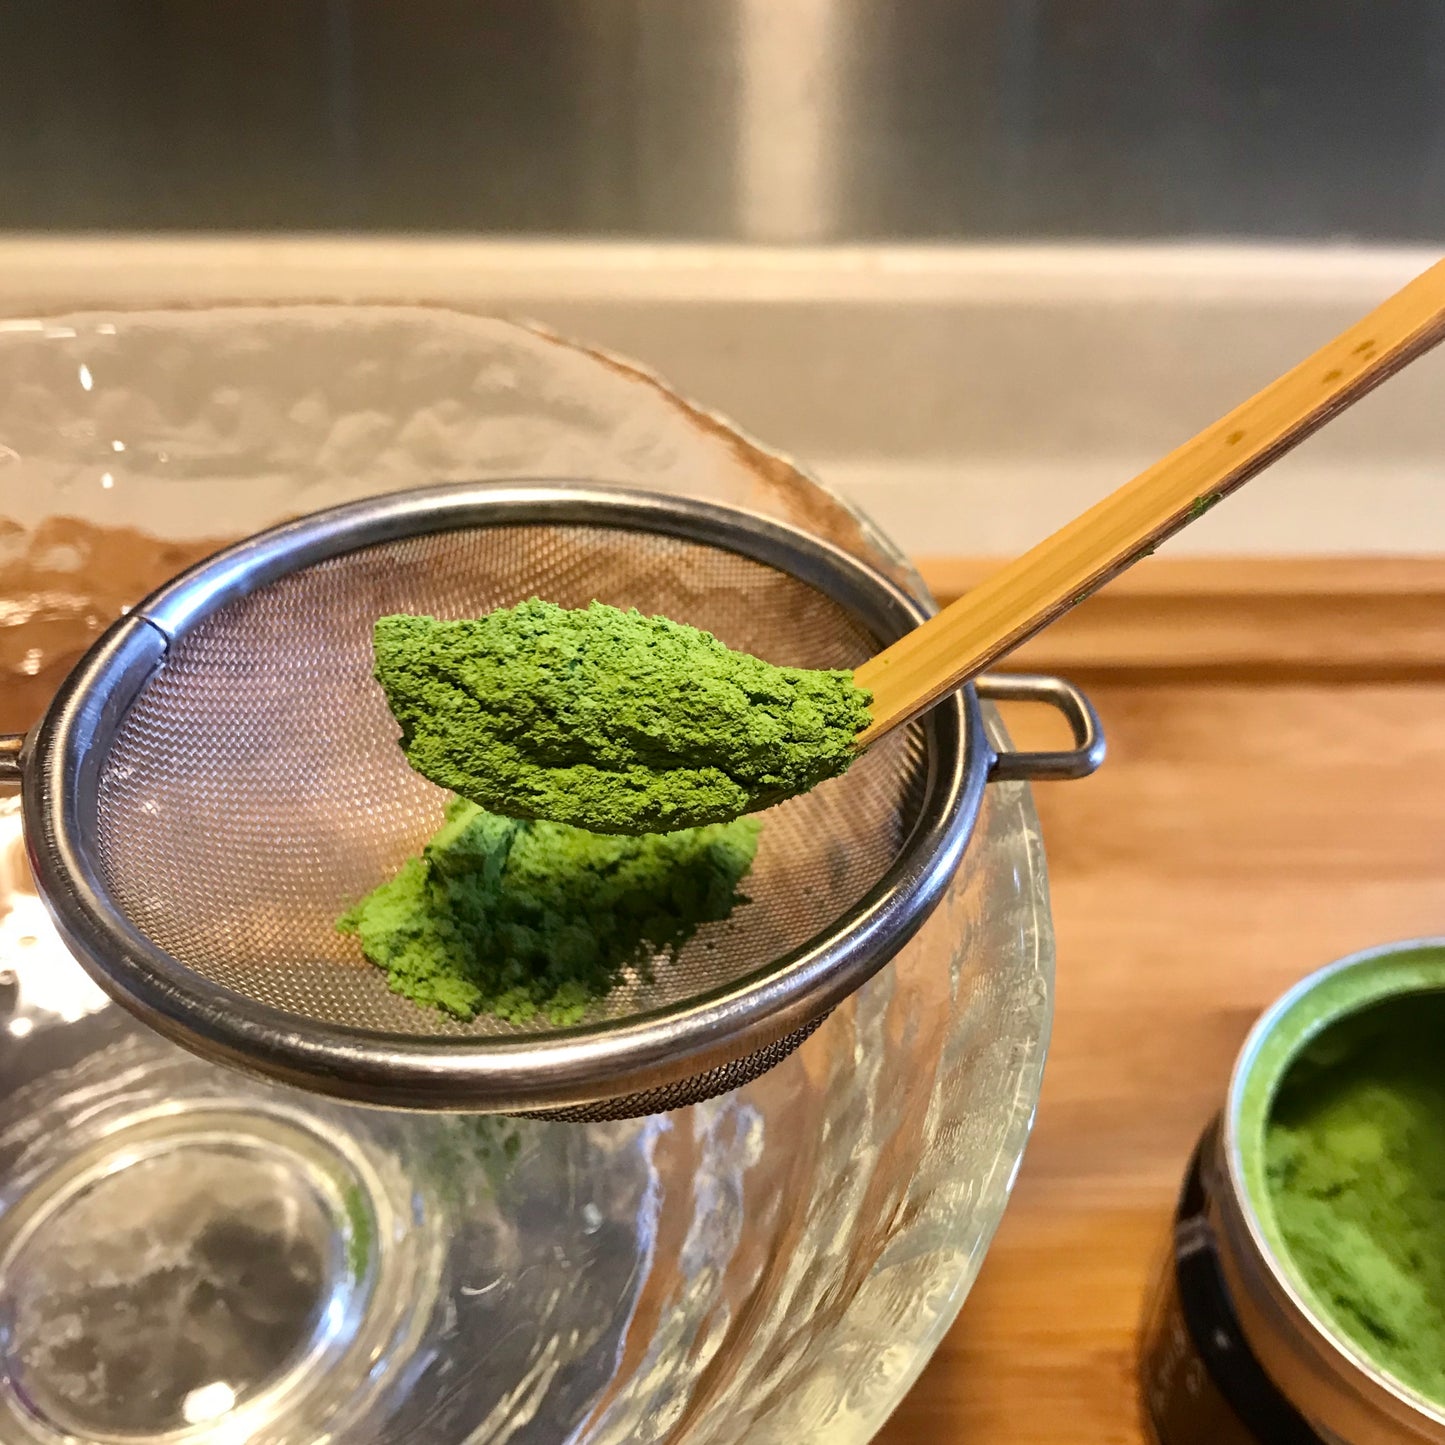 Chashaku / Bamboo tea spoon